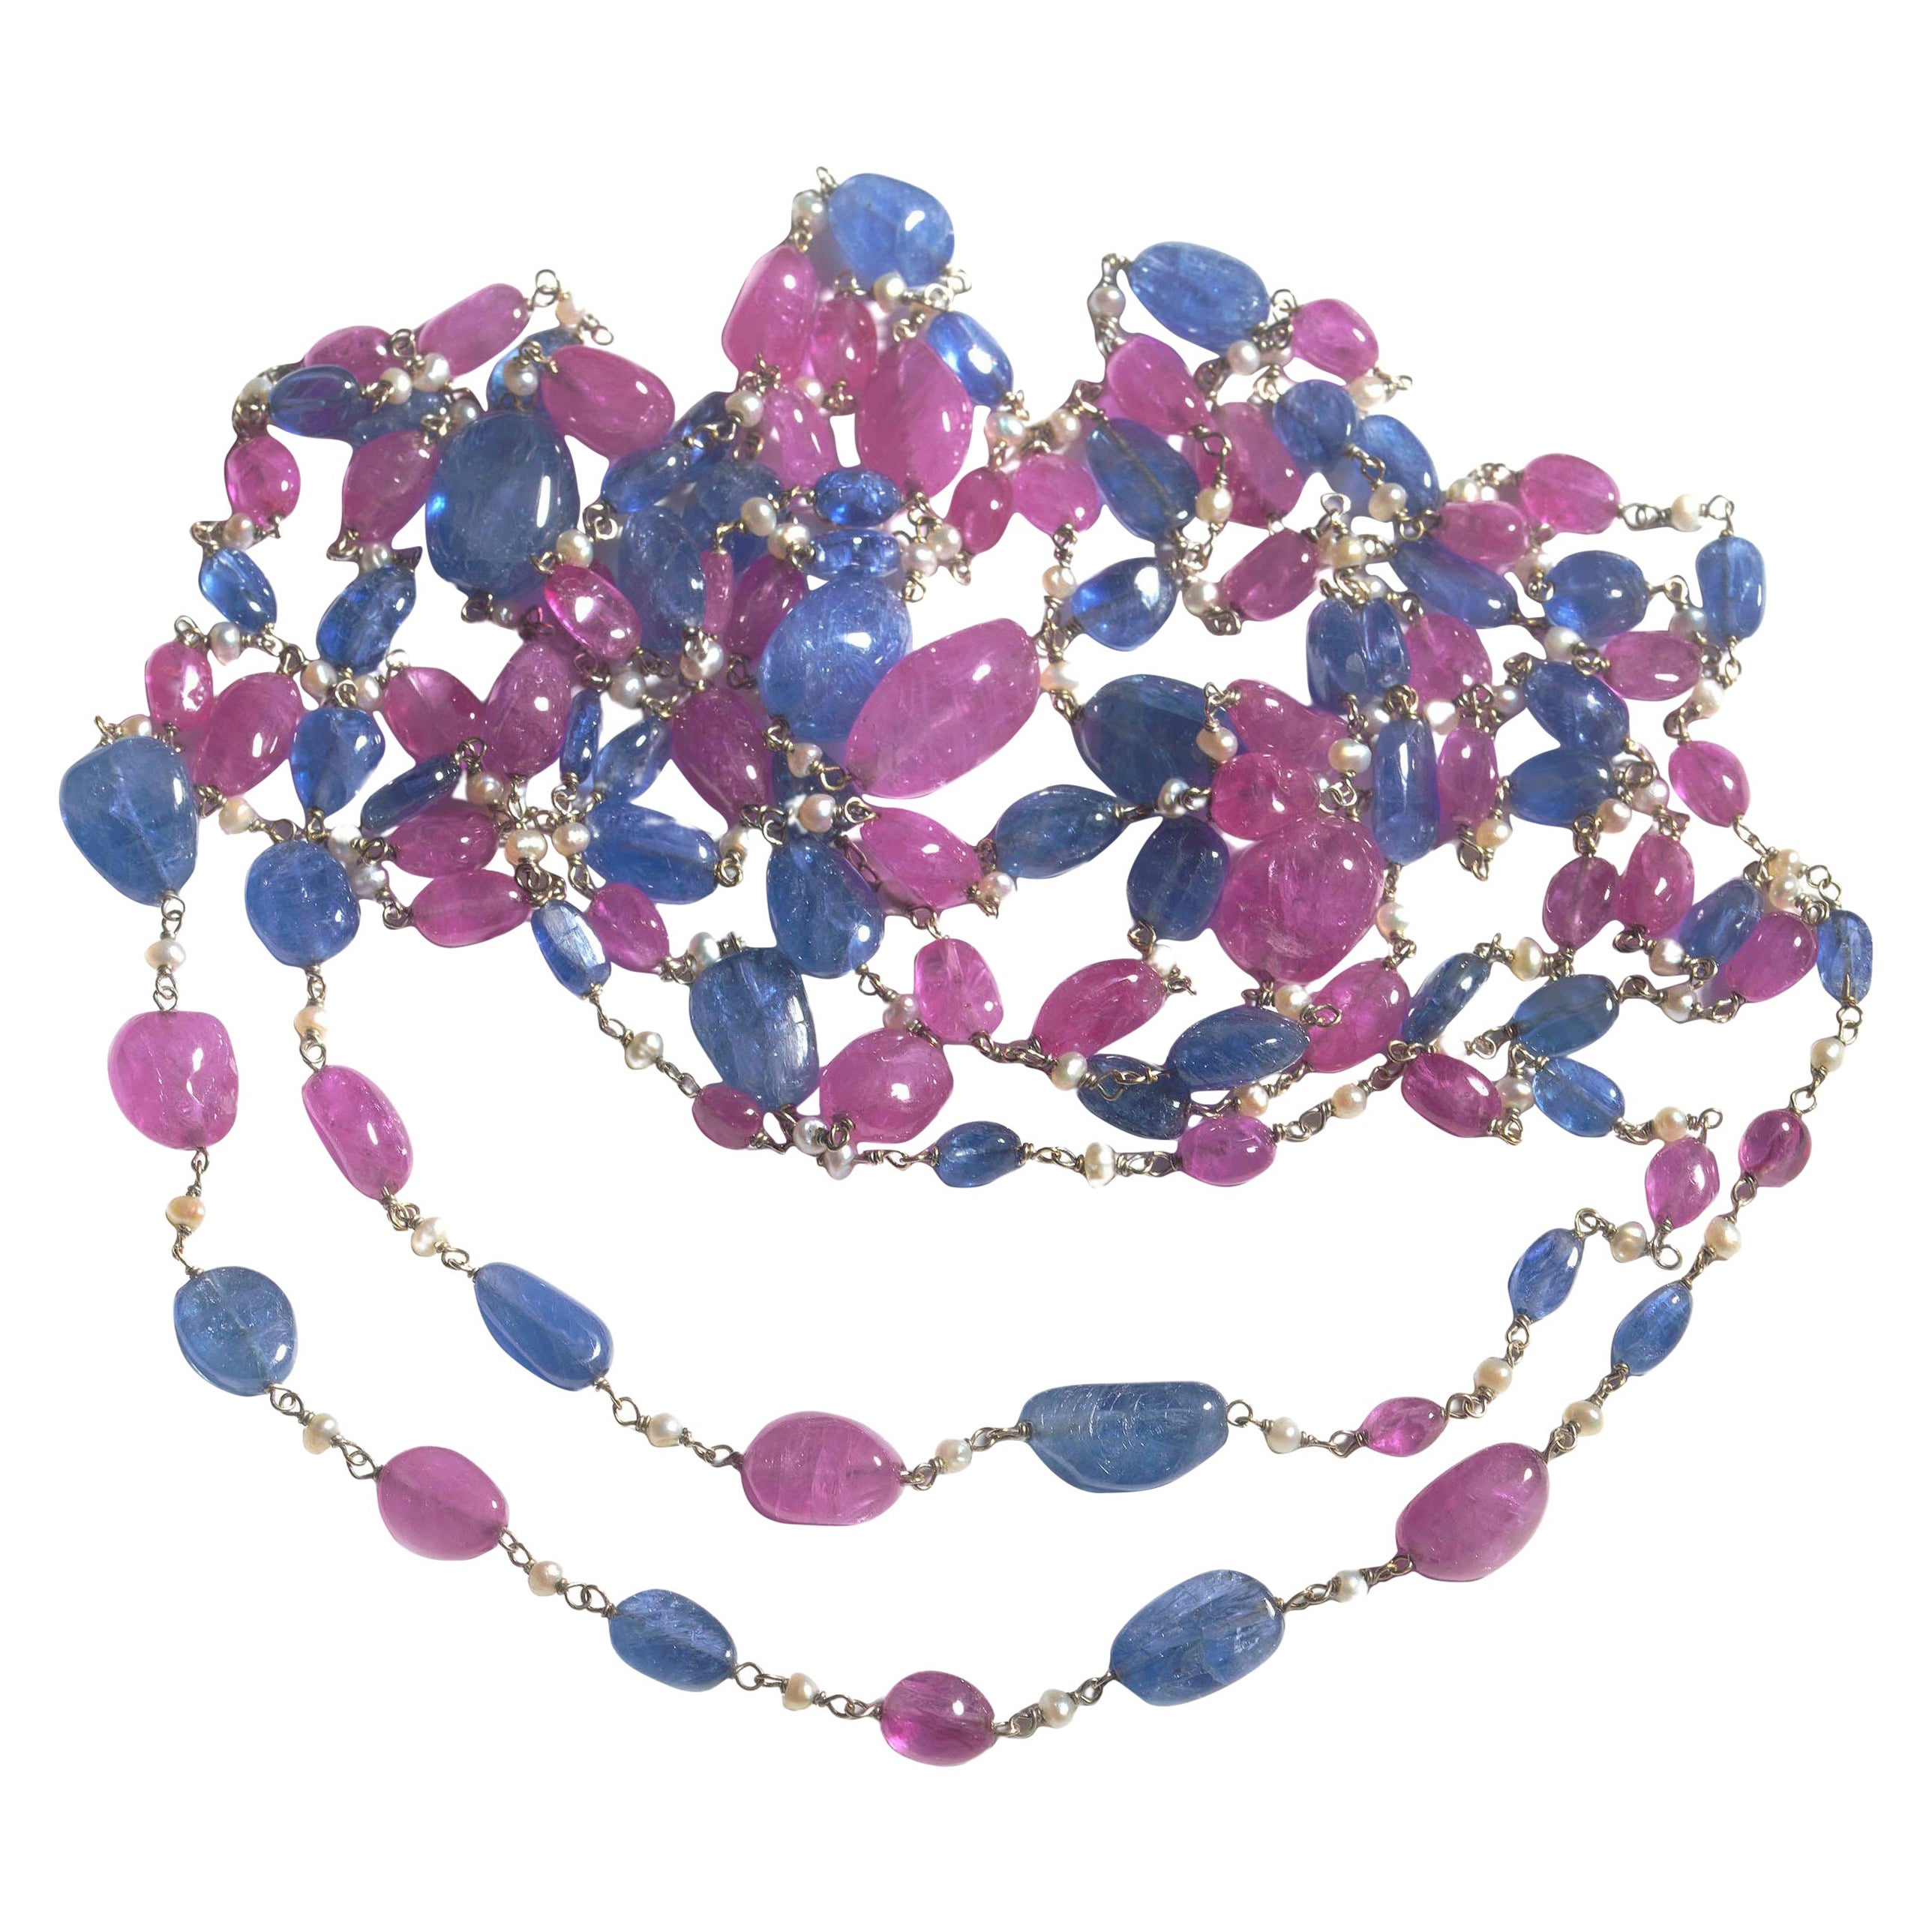 Collier longue chaîne saphir, rubis, perle et or blanc